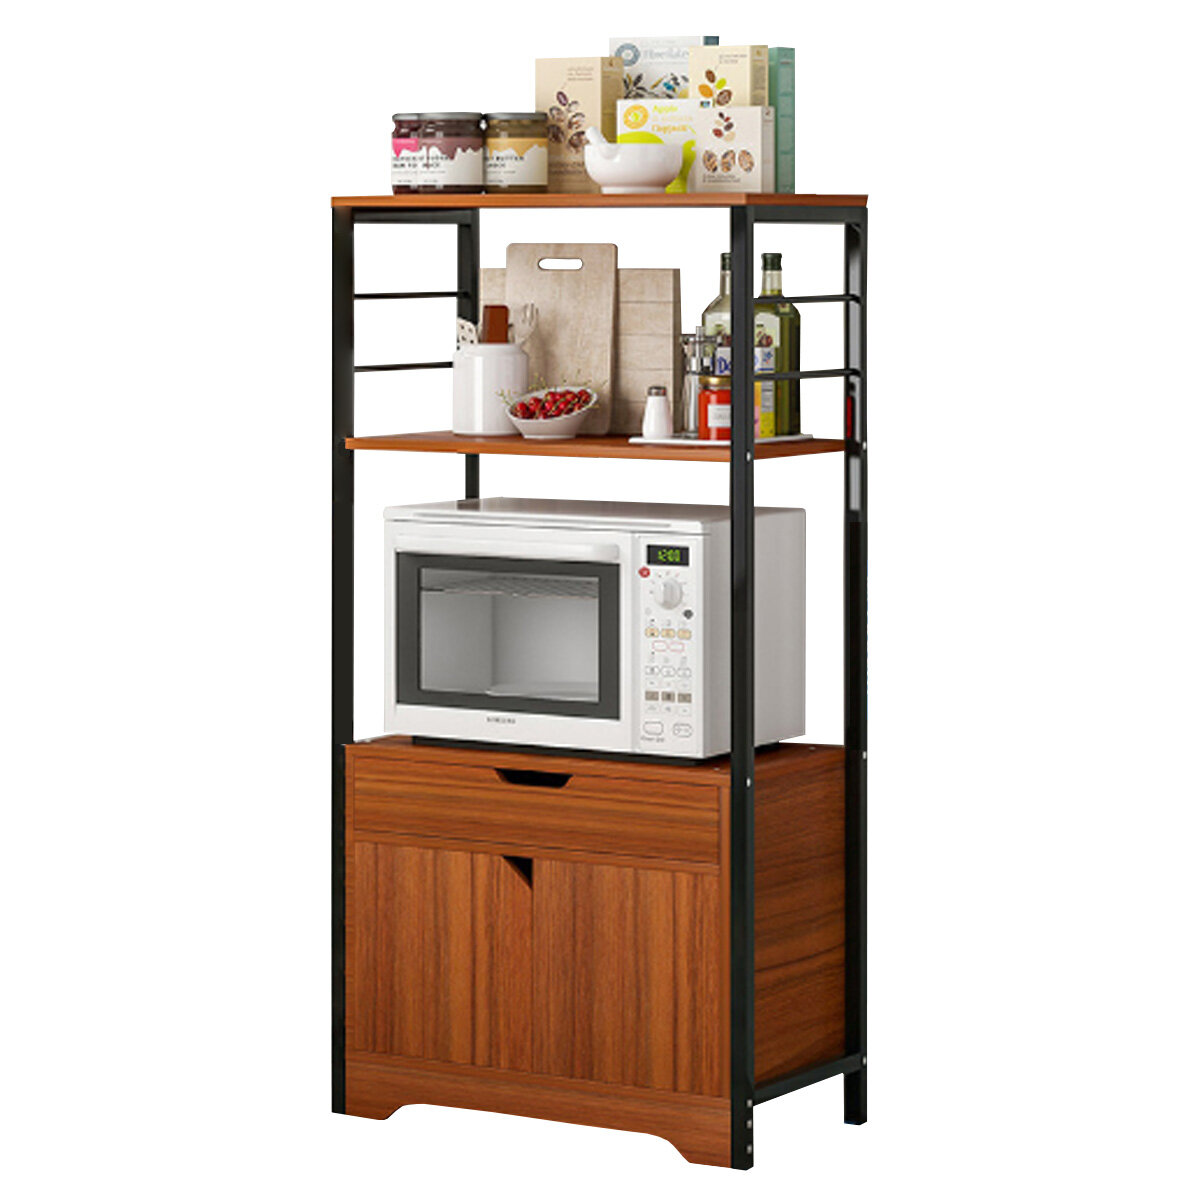 3 Tiers Microwave Oven Rack Kitchen Cupboard Rack Storage Shelf Storage Cabinet Desktop Space Saving